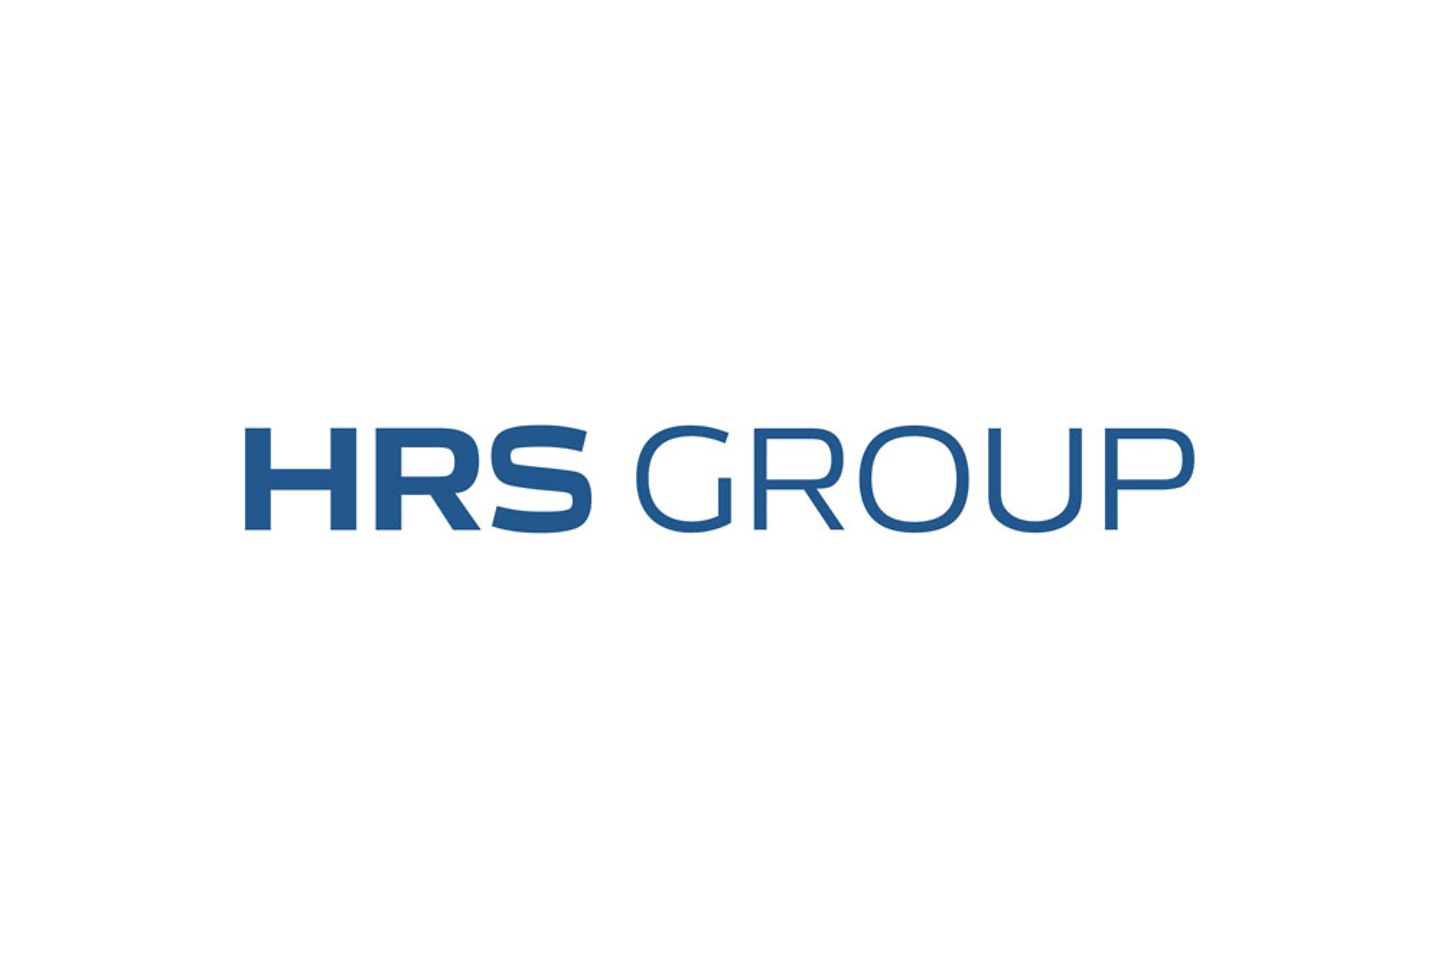 HRS Group logo